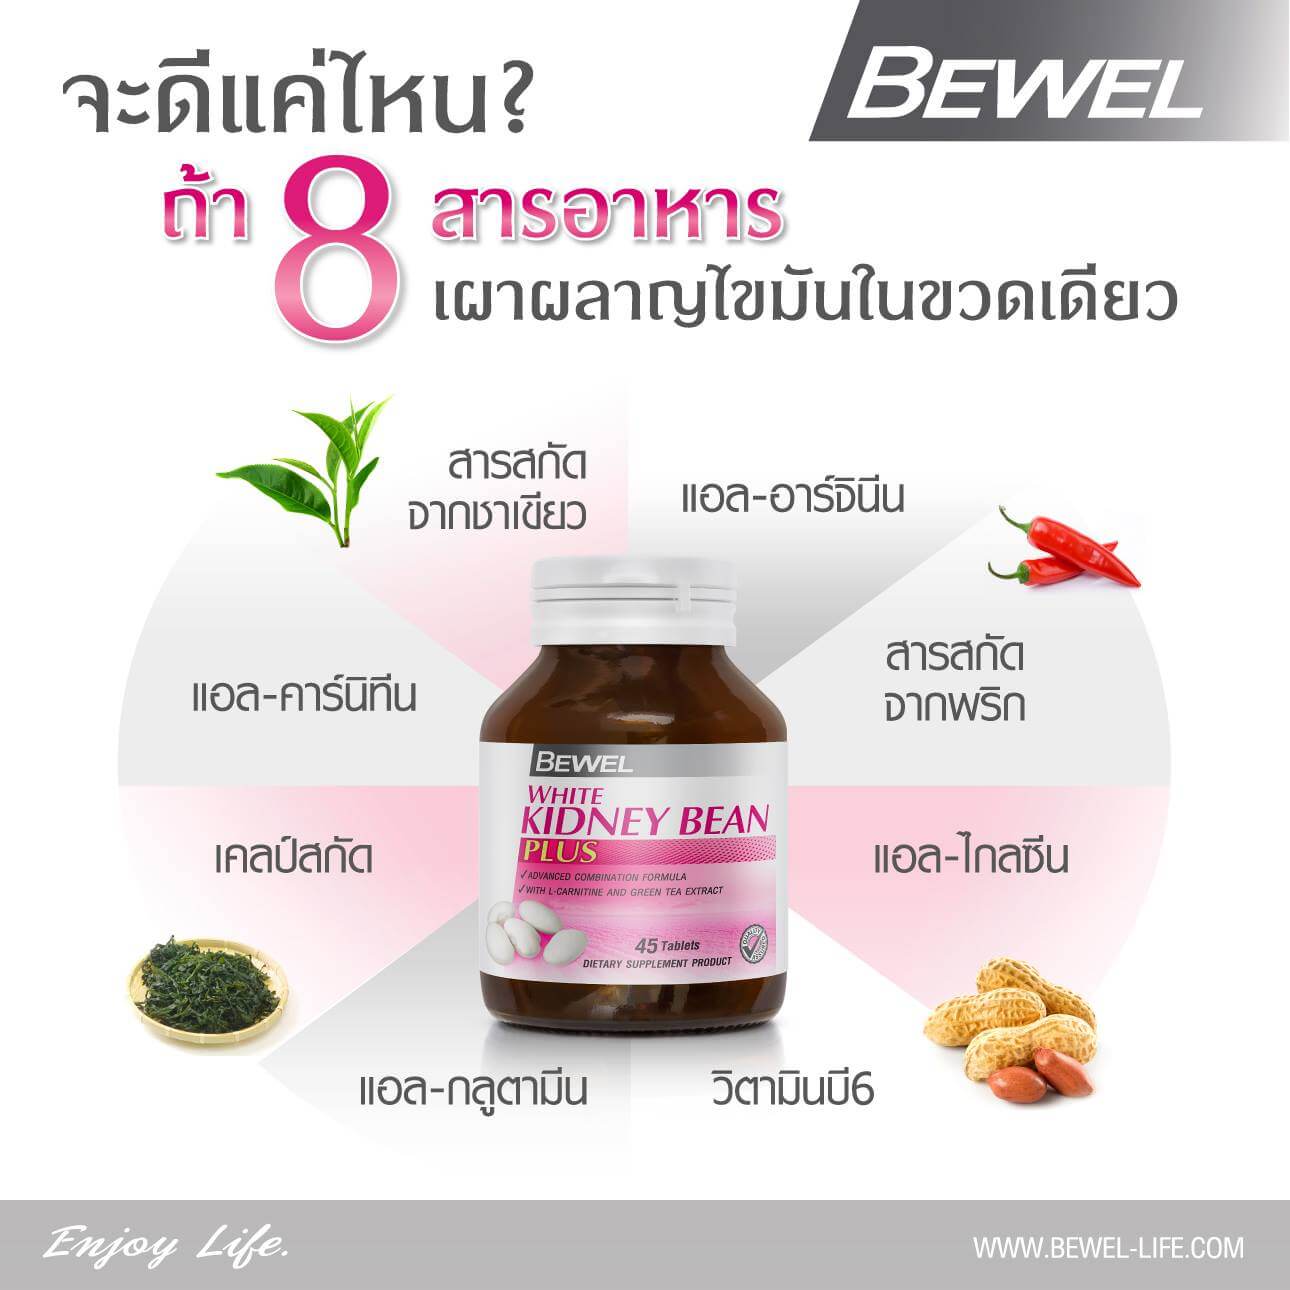 BEWEL,BEWEL White Kidney Bean,bewel ลดน้ำหนัก,อาหารเสริมถั่วขาว,บีเวล อาหารเสริม